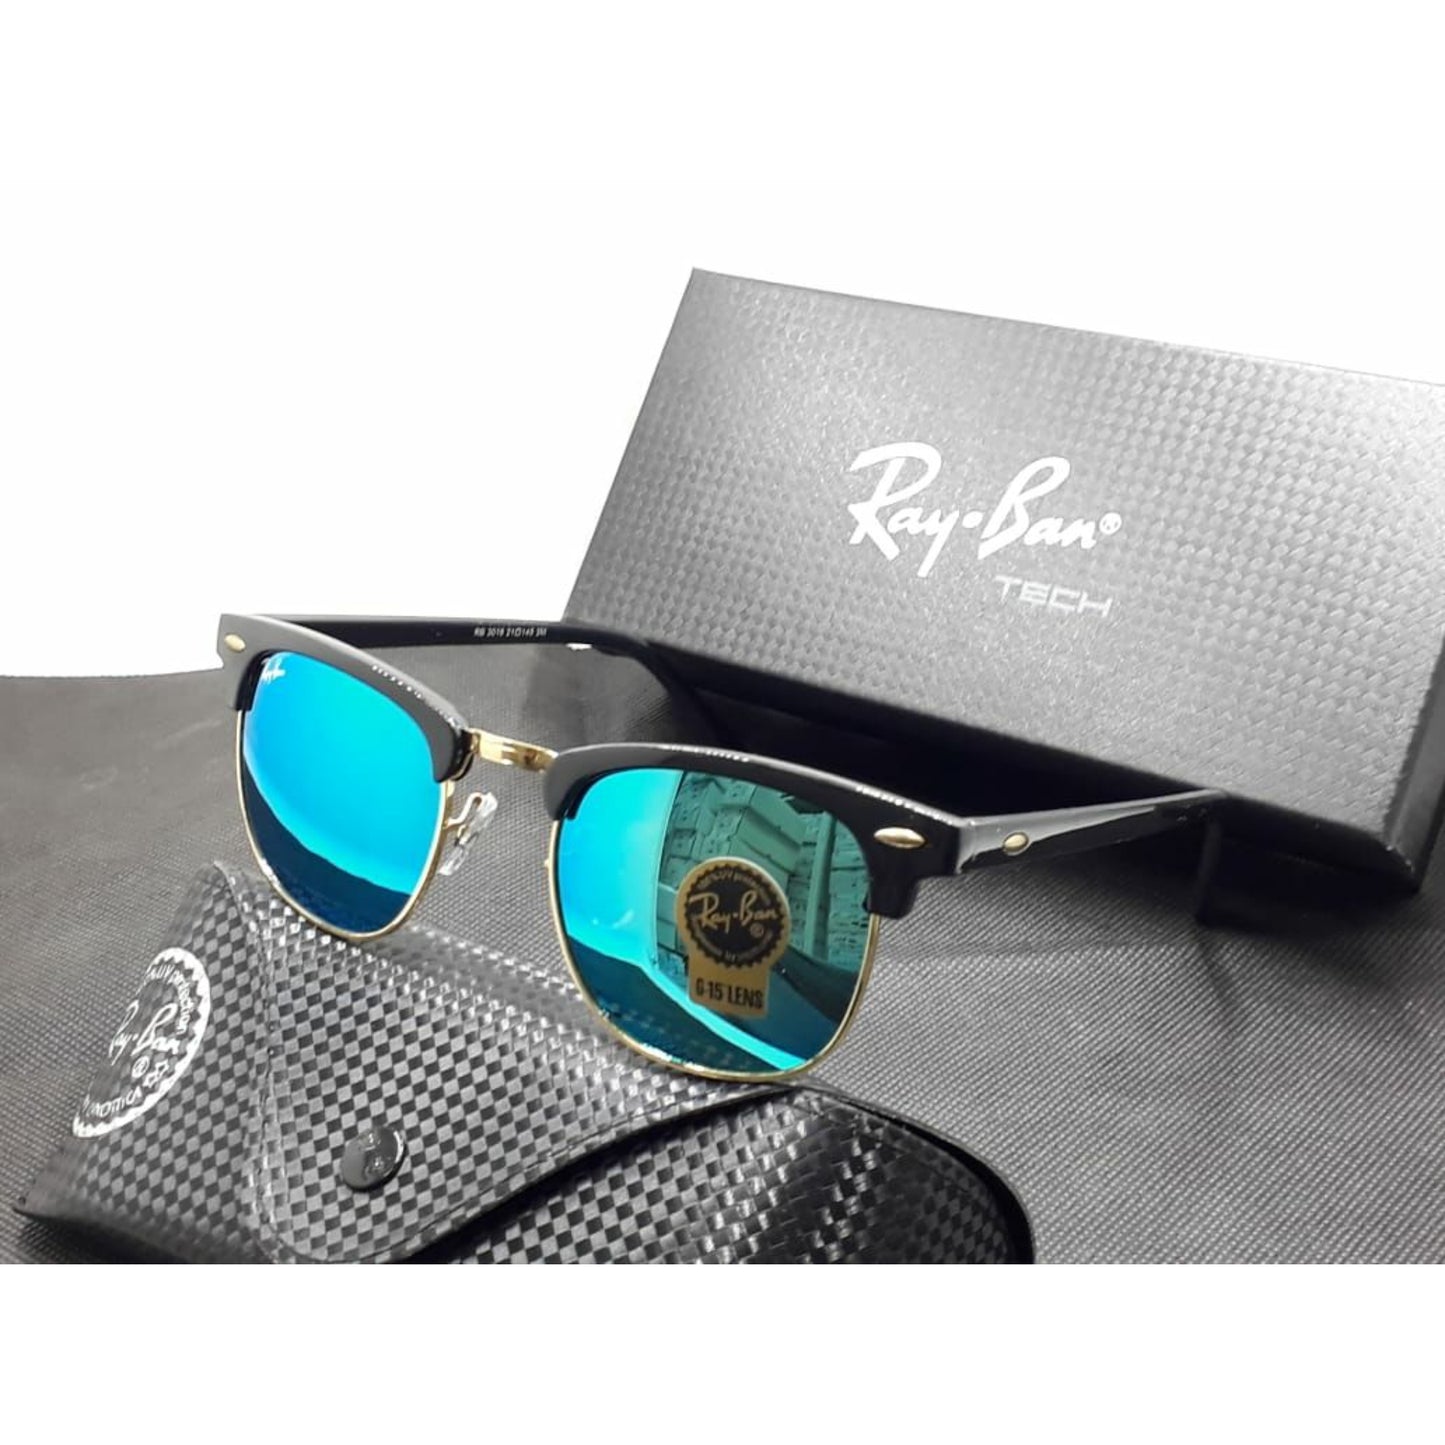 Buy New Stylish Men Women A1+ Quality Latest Designer Hot Favorite Club Special Vintage Sunglasses ( RB-3016 Club Master Sunglass )